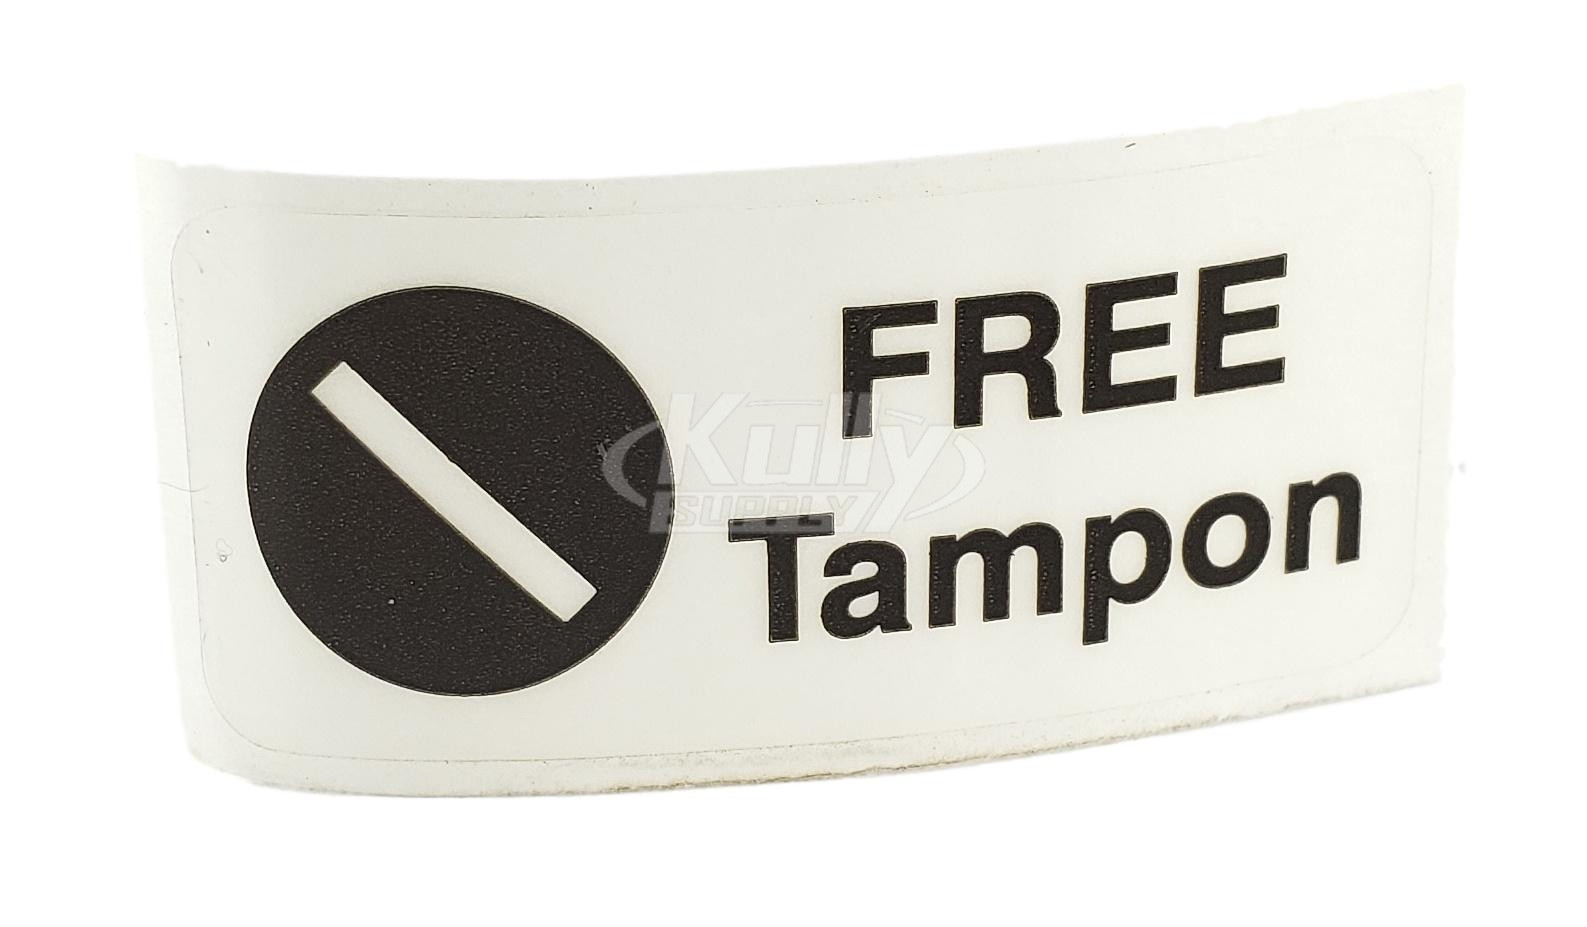 Free Tampon Sticker